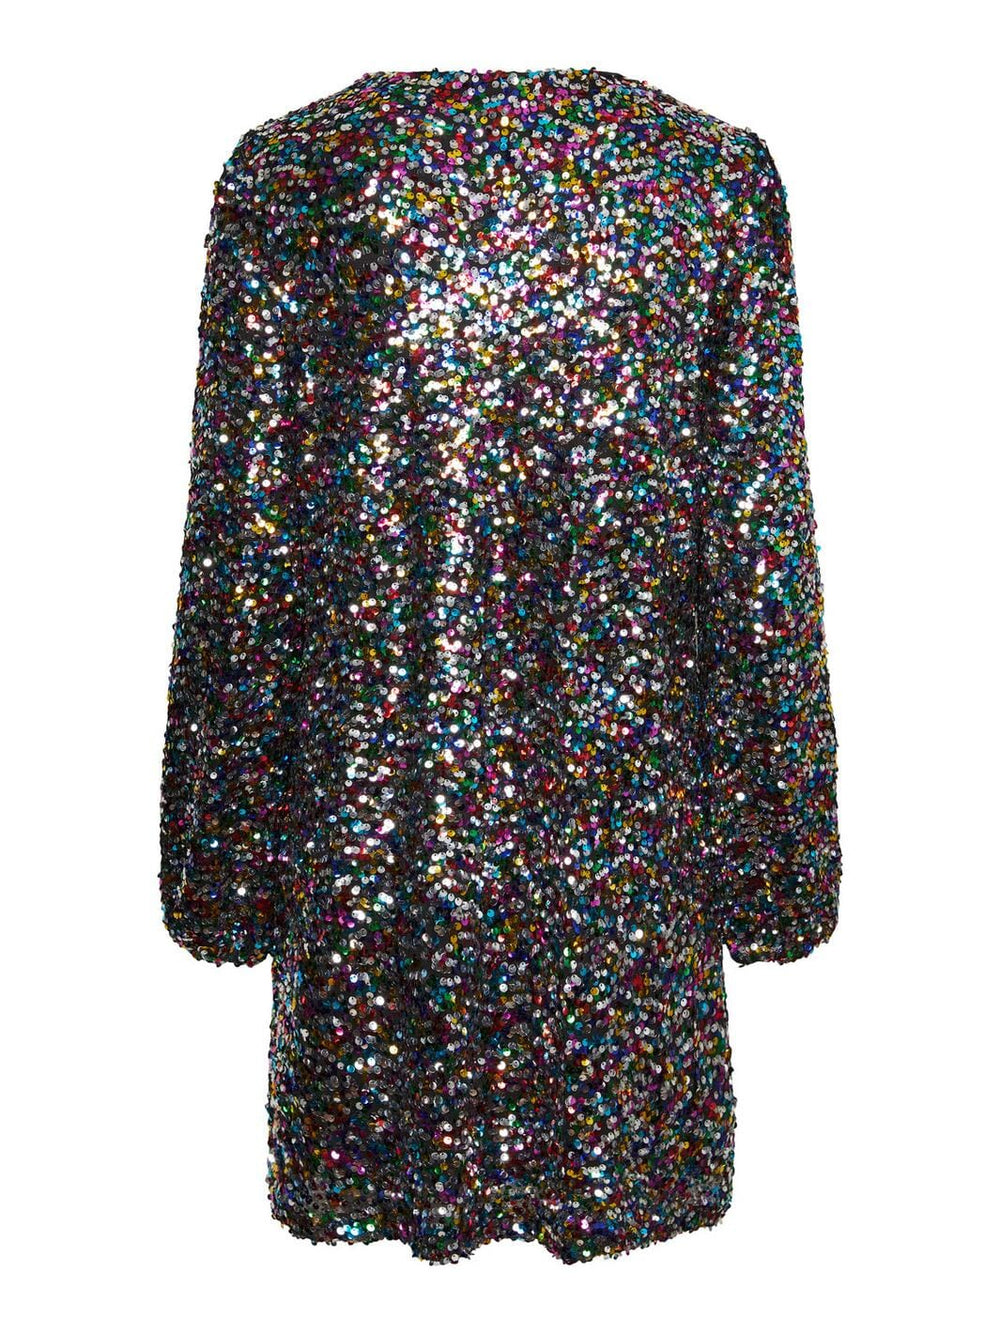 Pieces - Pcnima Ls V-Neck Dress - 4531616 Black Multi Colored Sequins